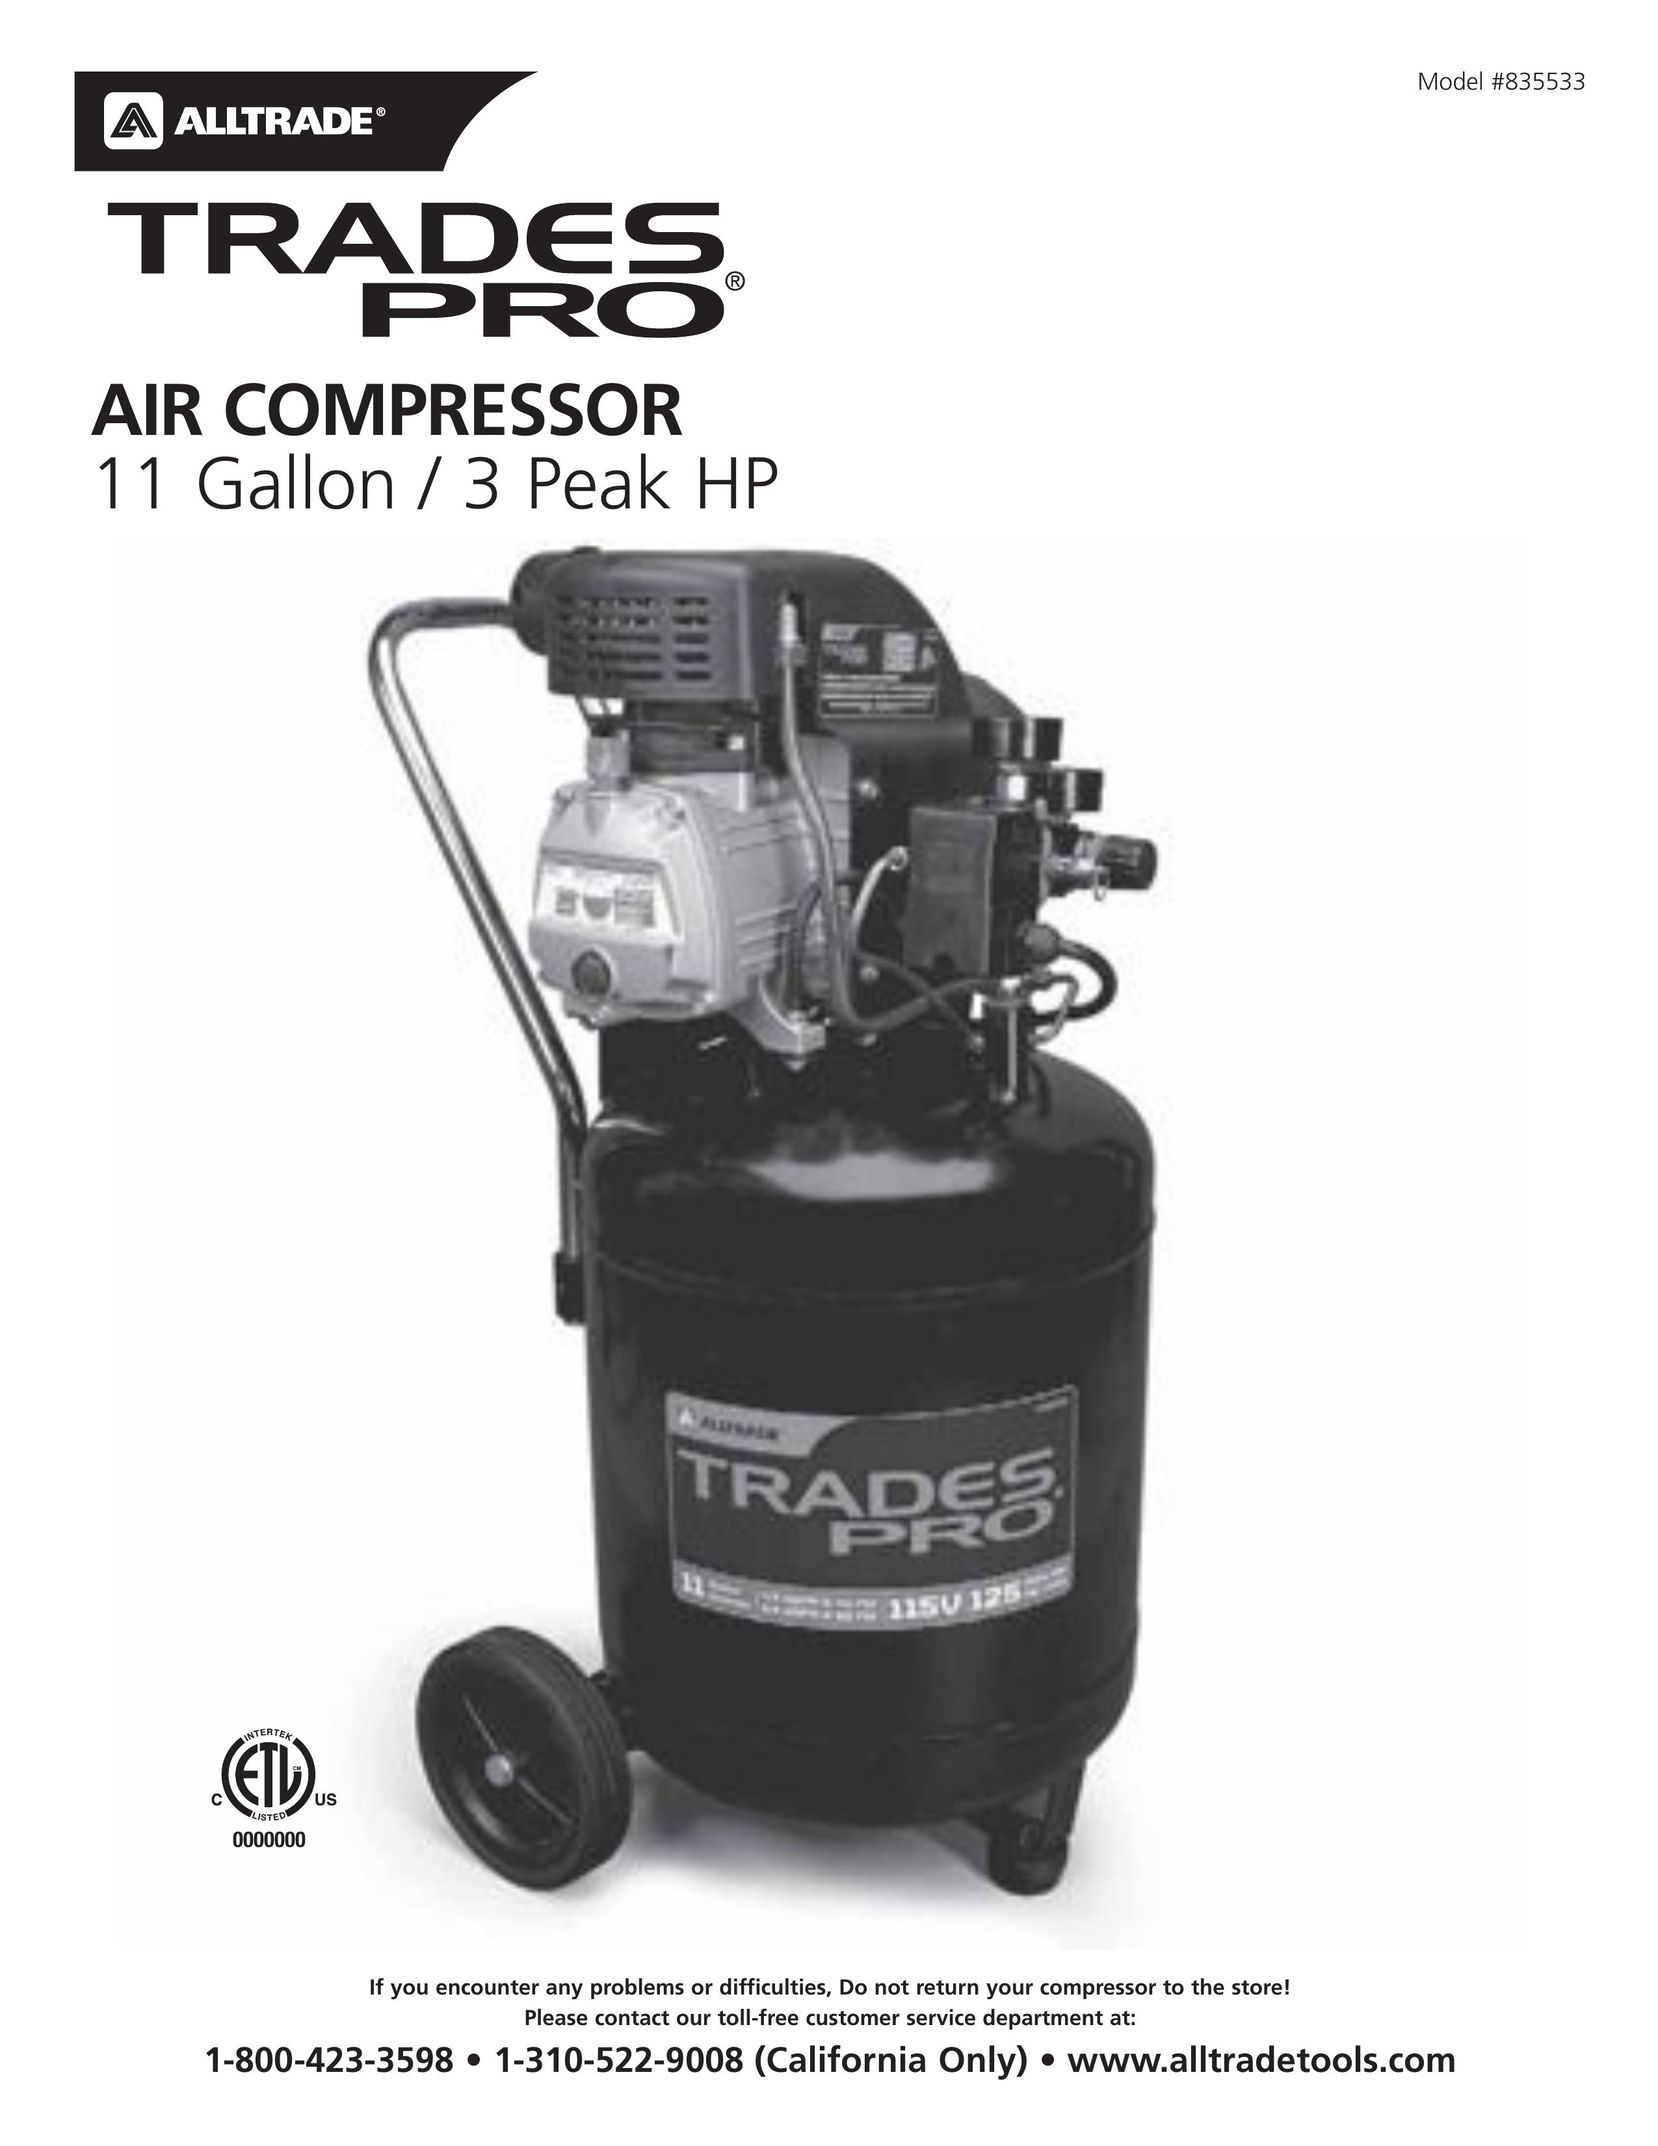 AllTrade 835533 Air Compressor User Manual